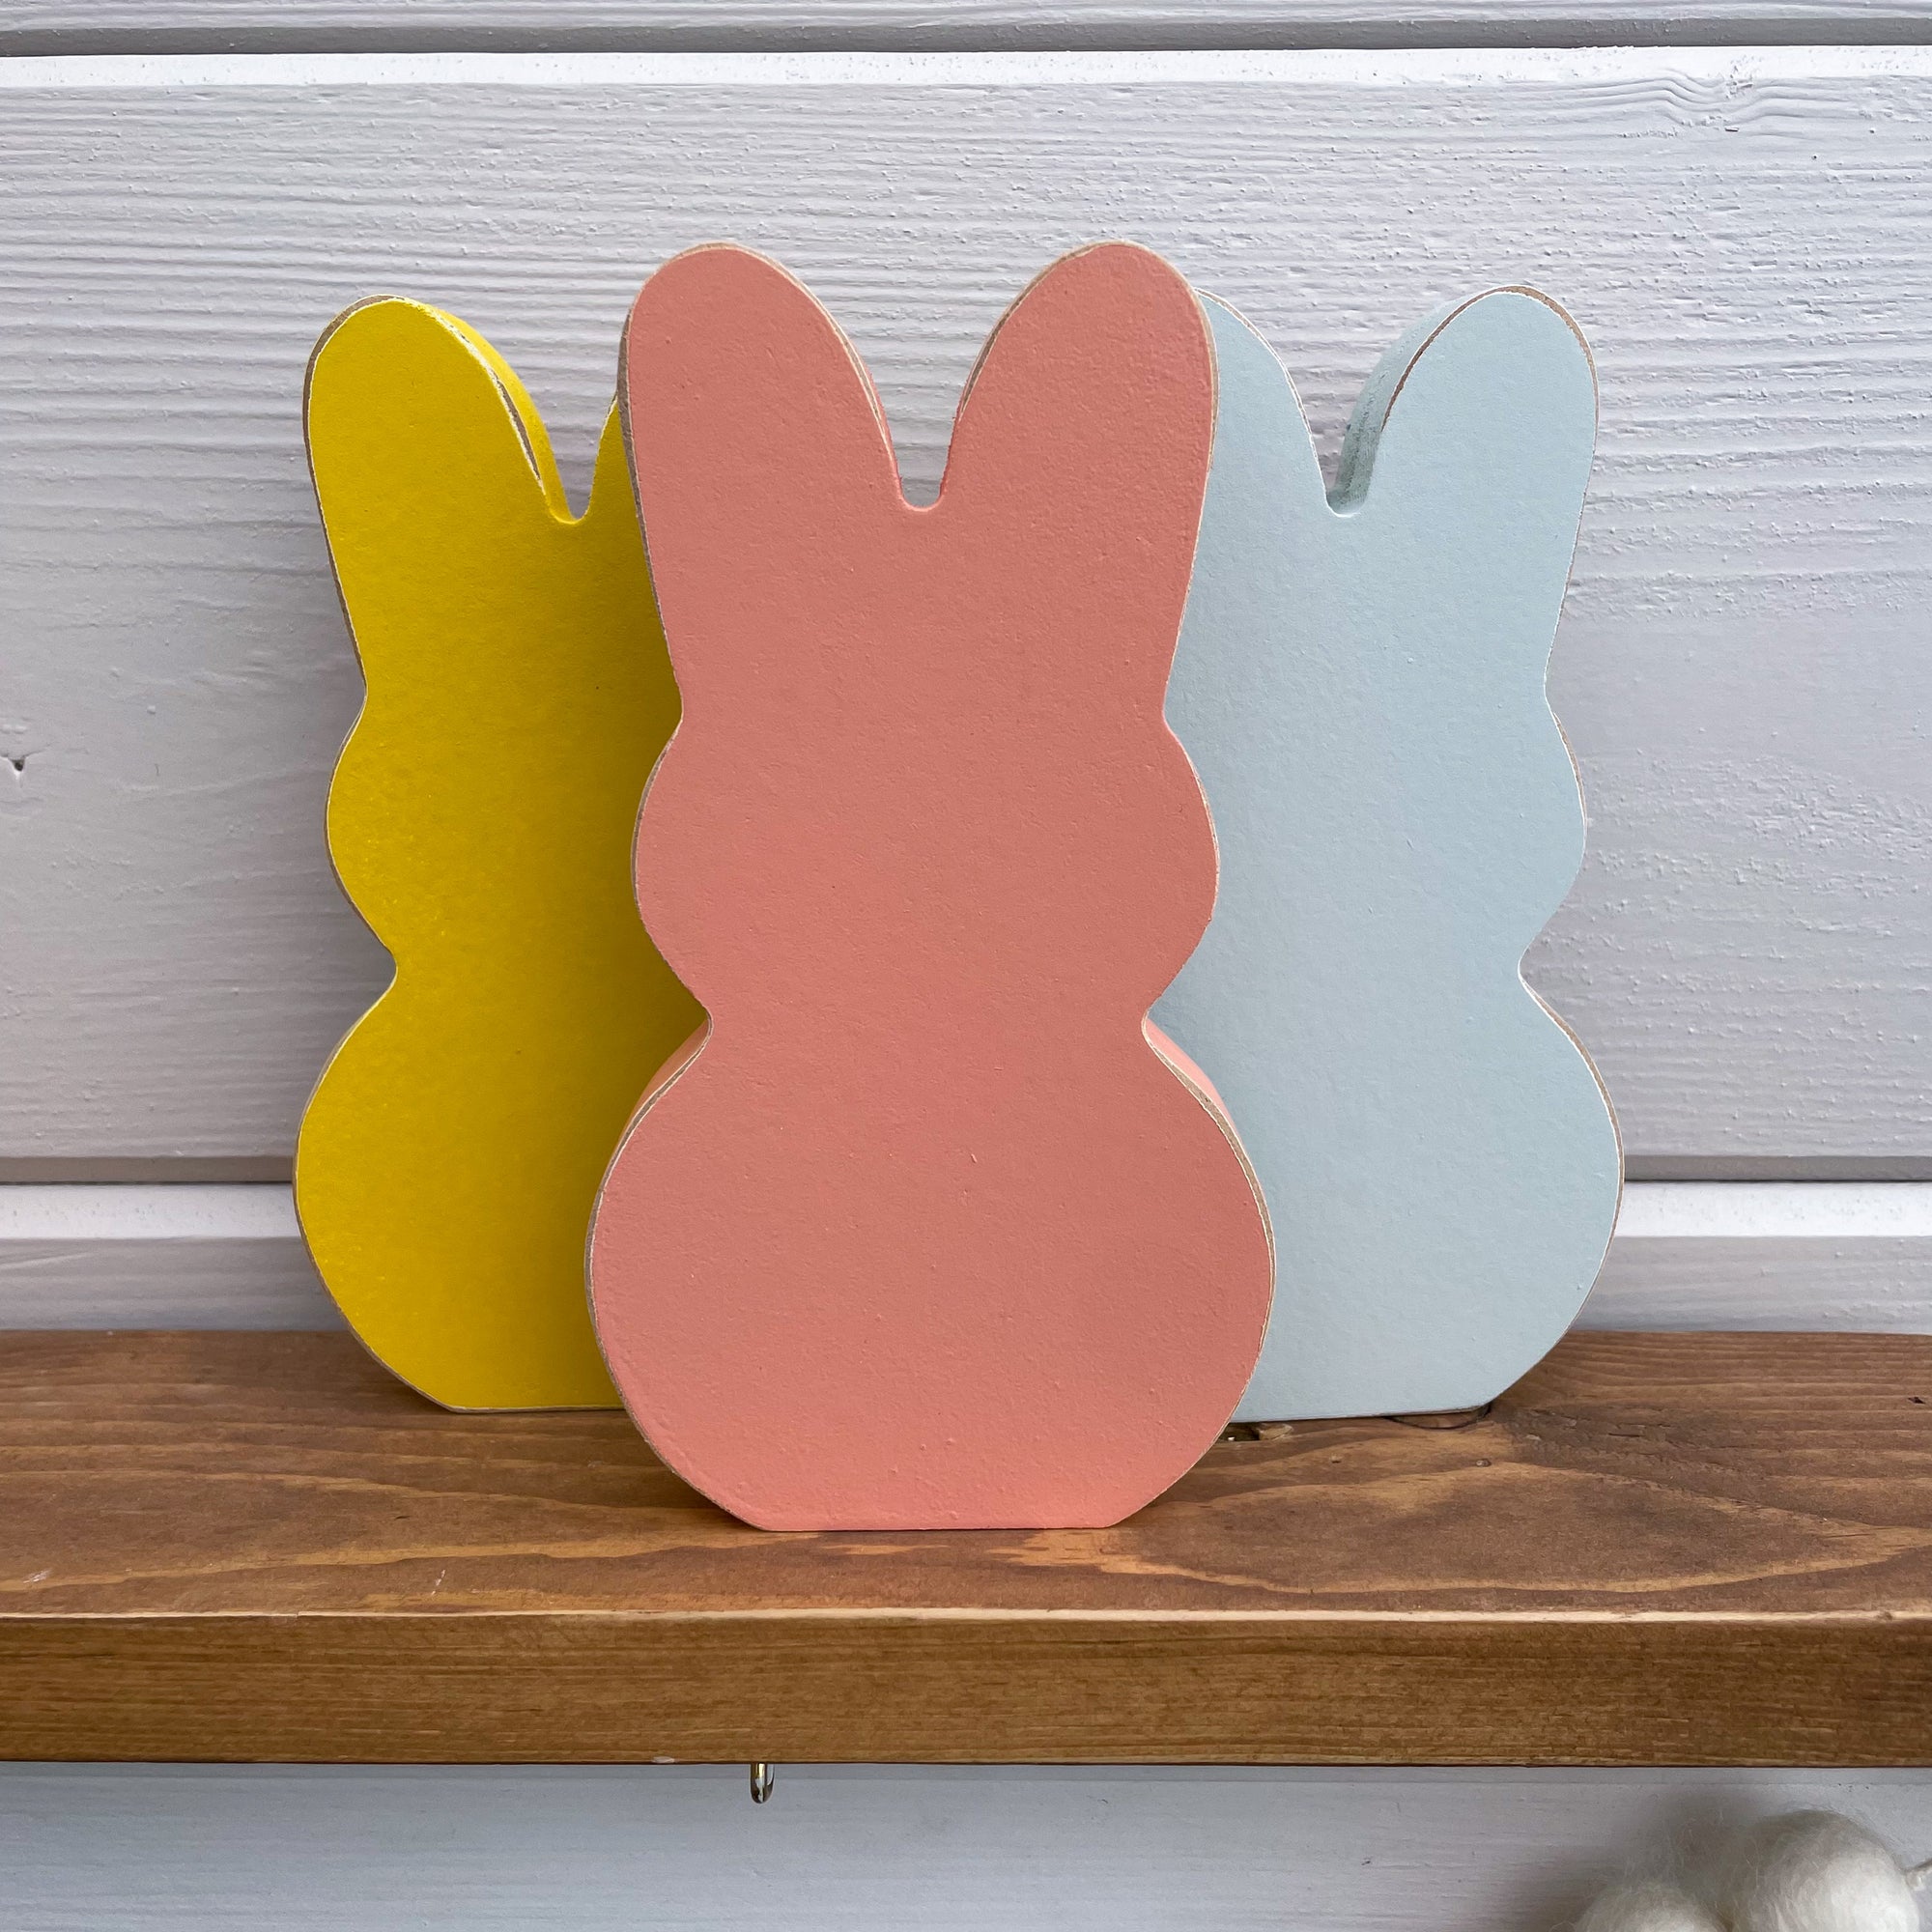 Peep Bunny- Easter, Home Decor